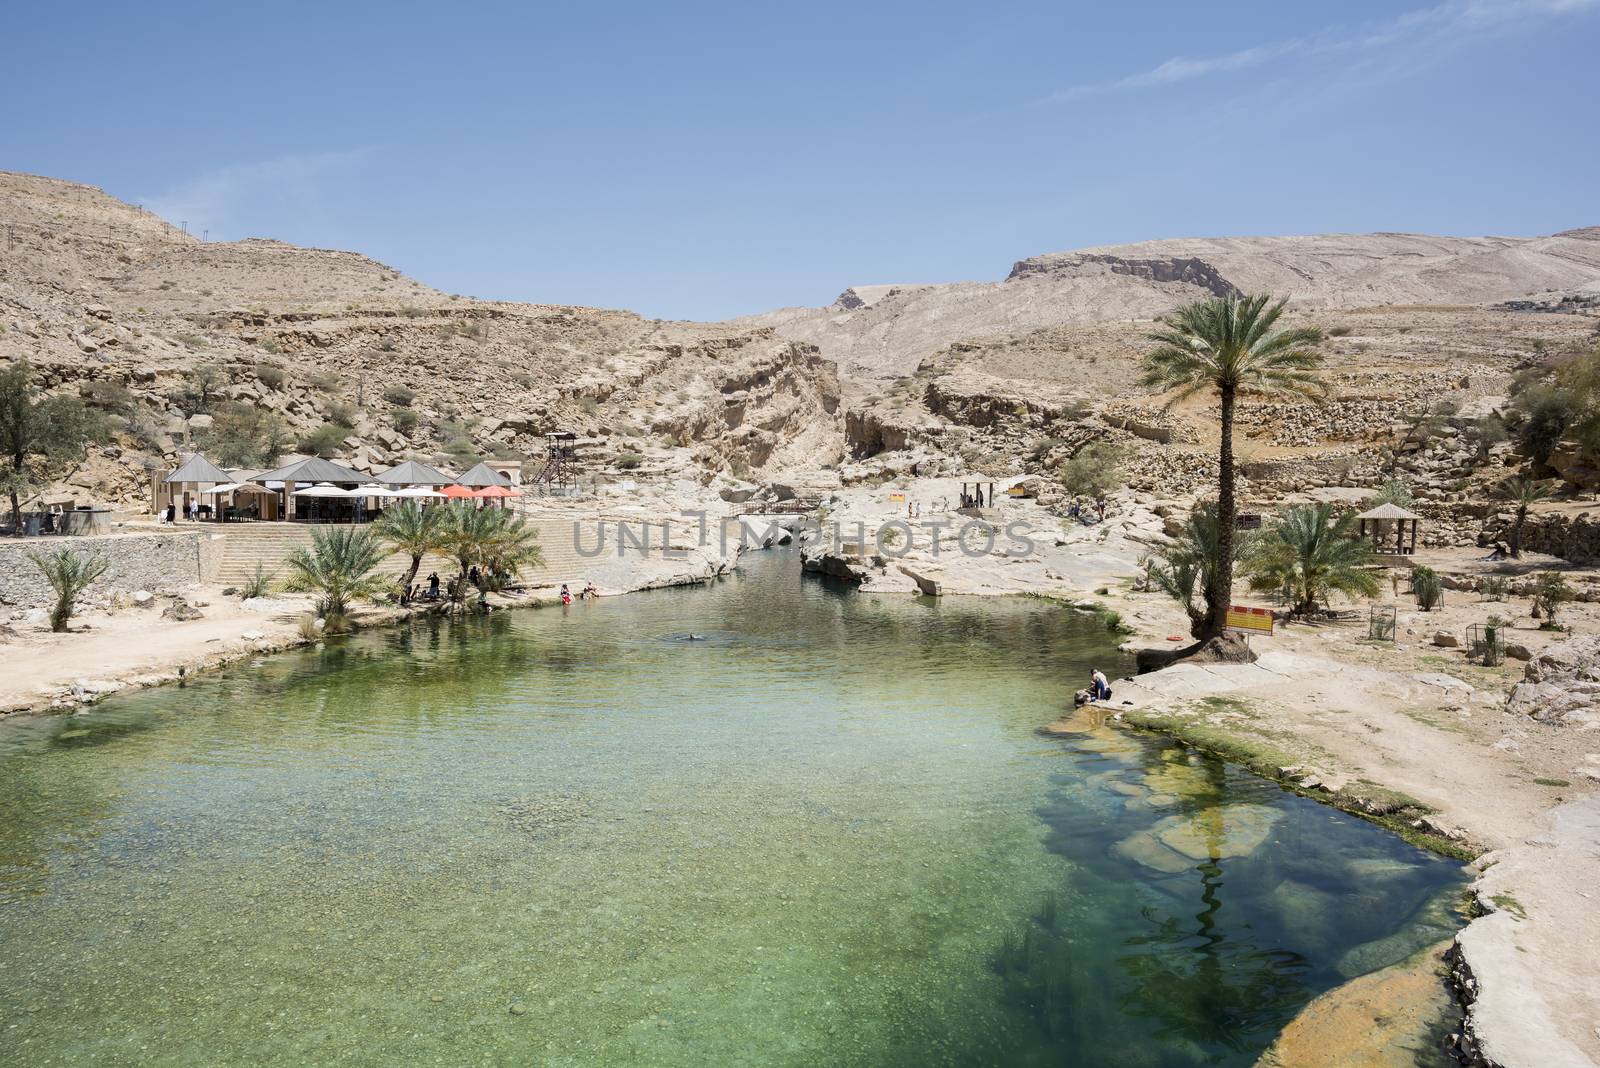 Tourists around Main pool of Wadi Bani Khalid, Oman by GABIS